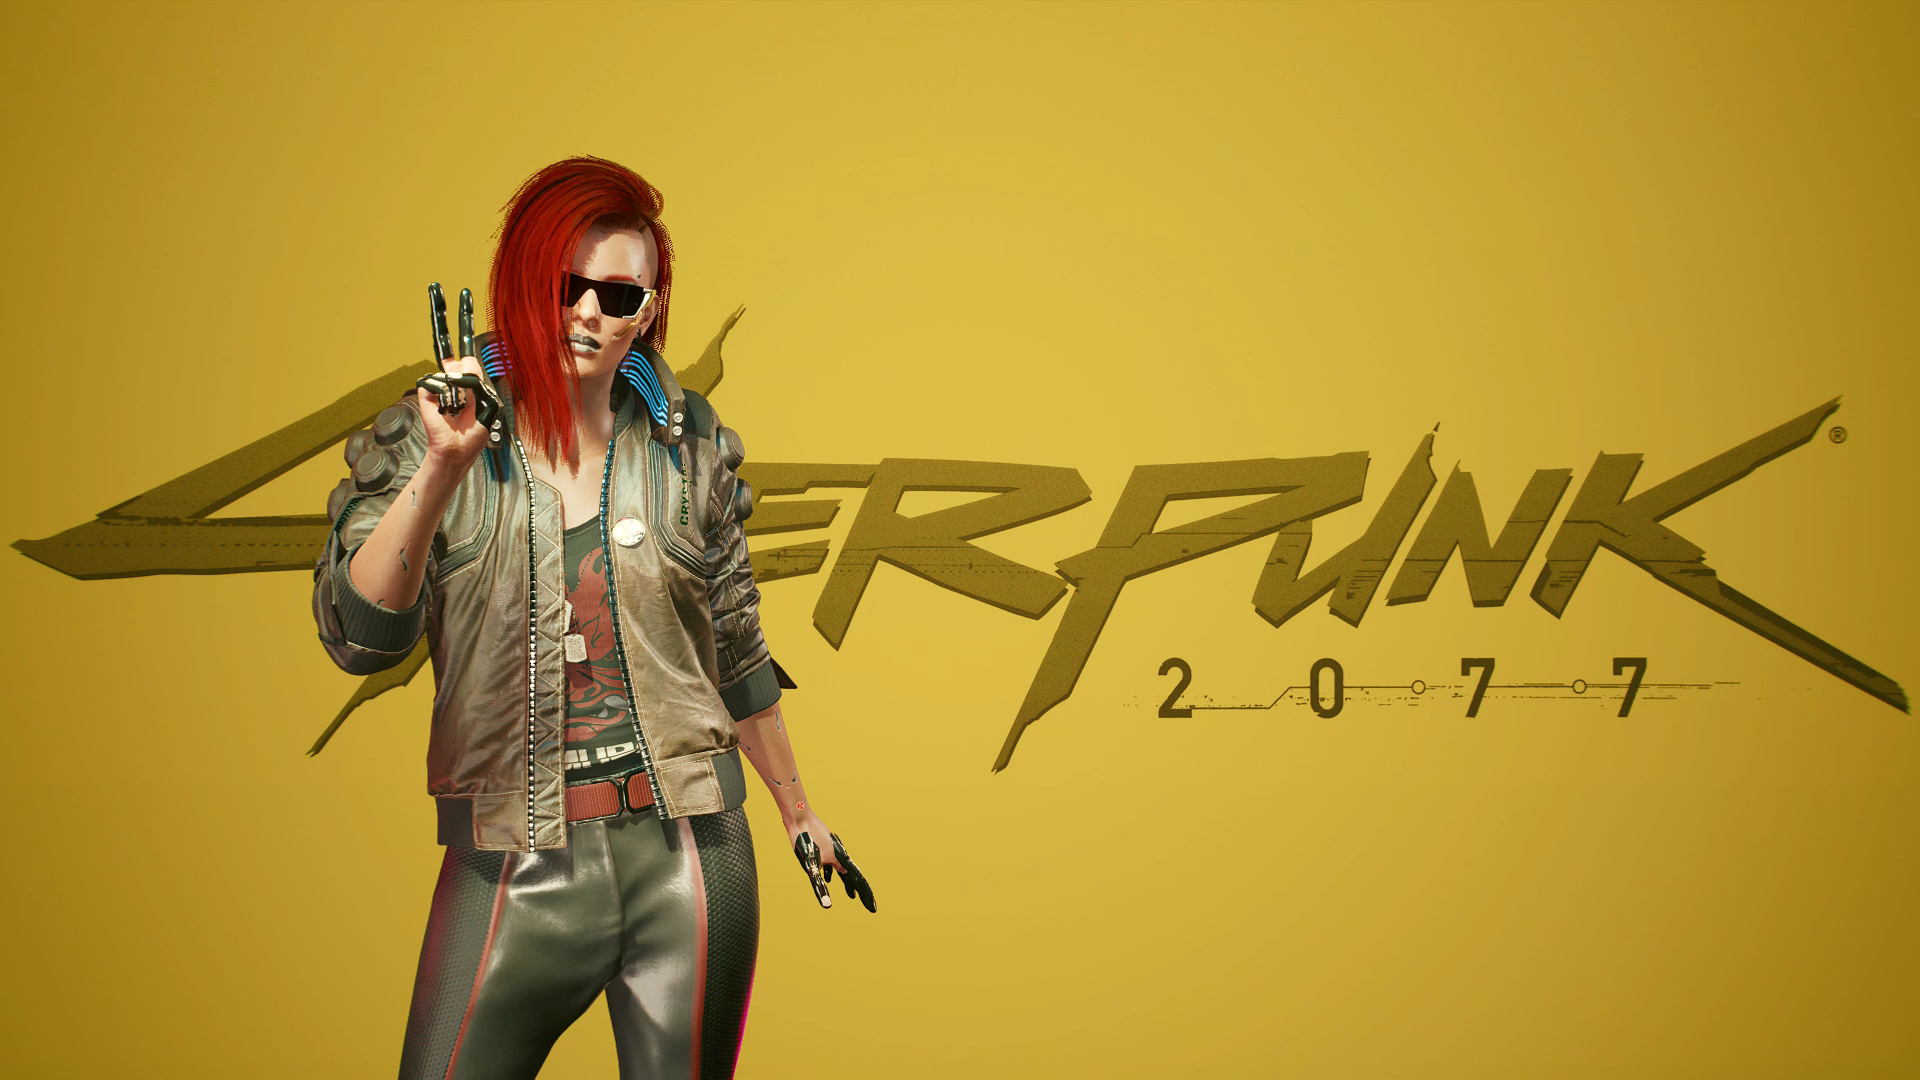 General 1920x1080 cyberpunk Cyberpunk 2077 redhead standing sunglasses logo jacket video games CD Projekt RED